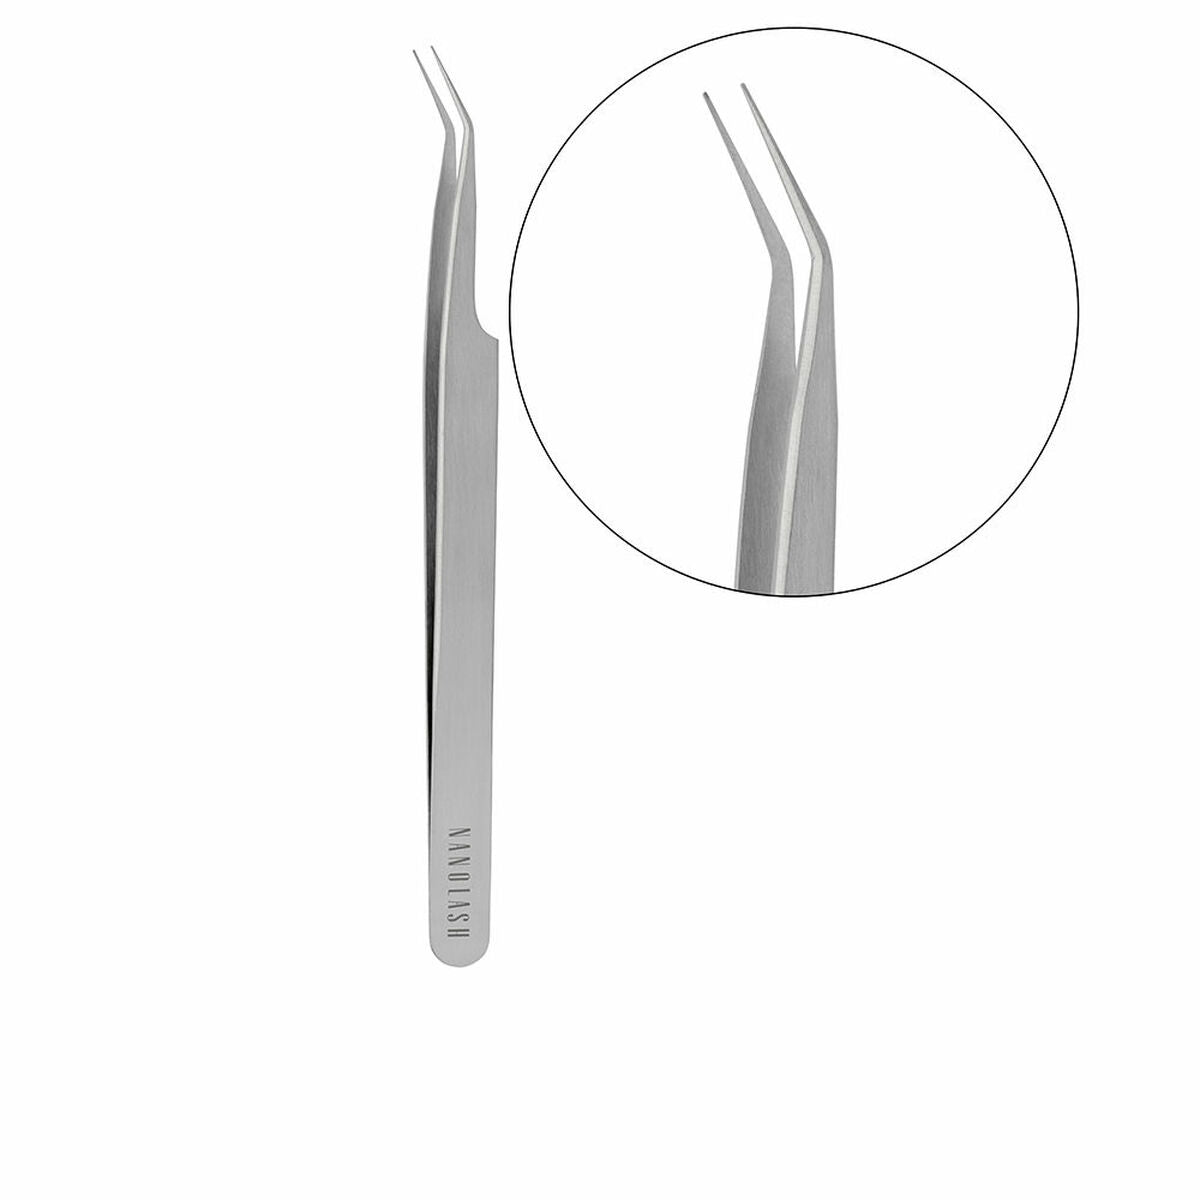 Precision pins Nanolash PINZAS False Eyelashes Curved